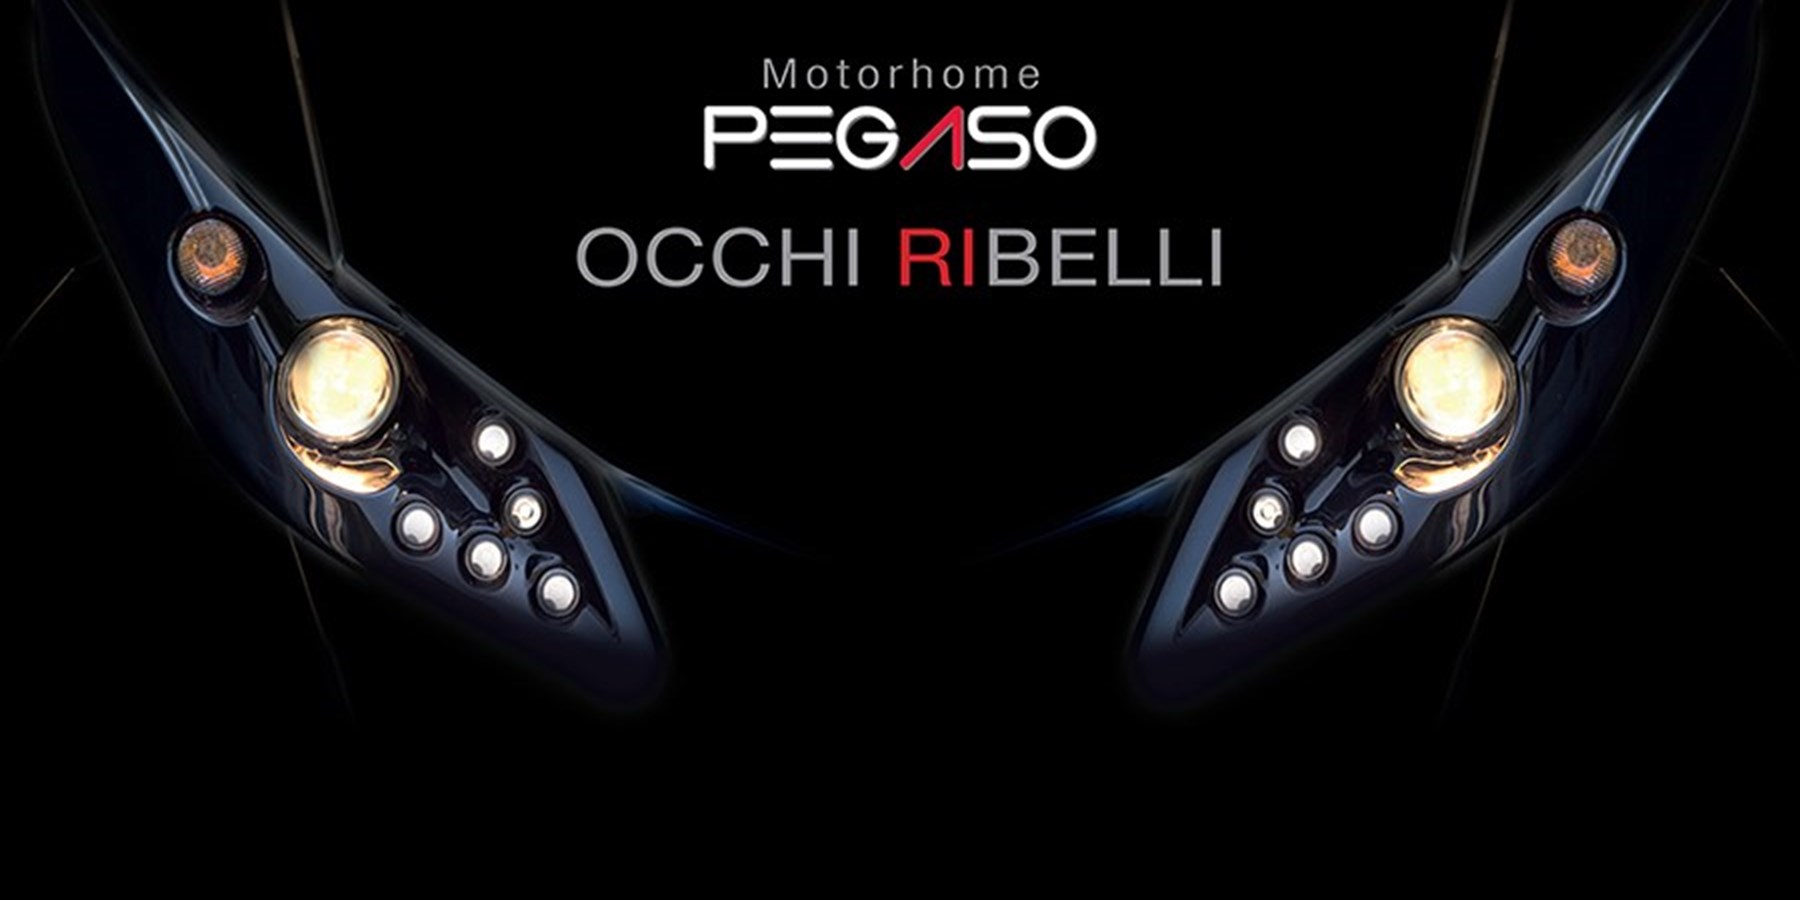 Roller Team - New Motorhome Pegaso